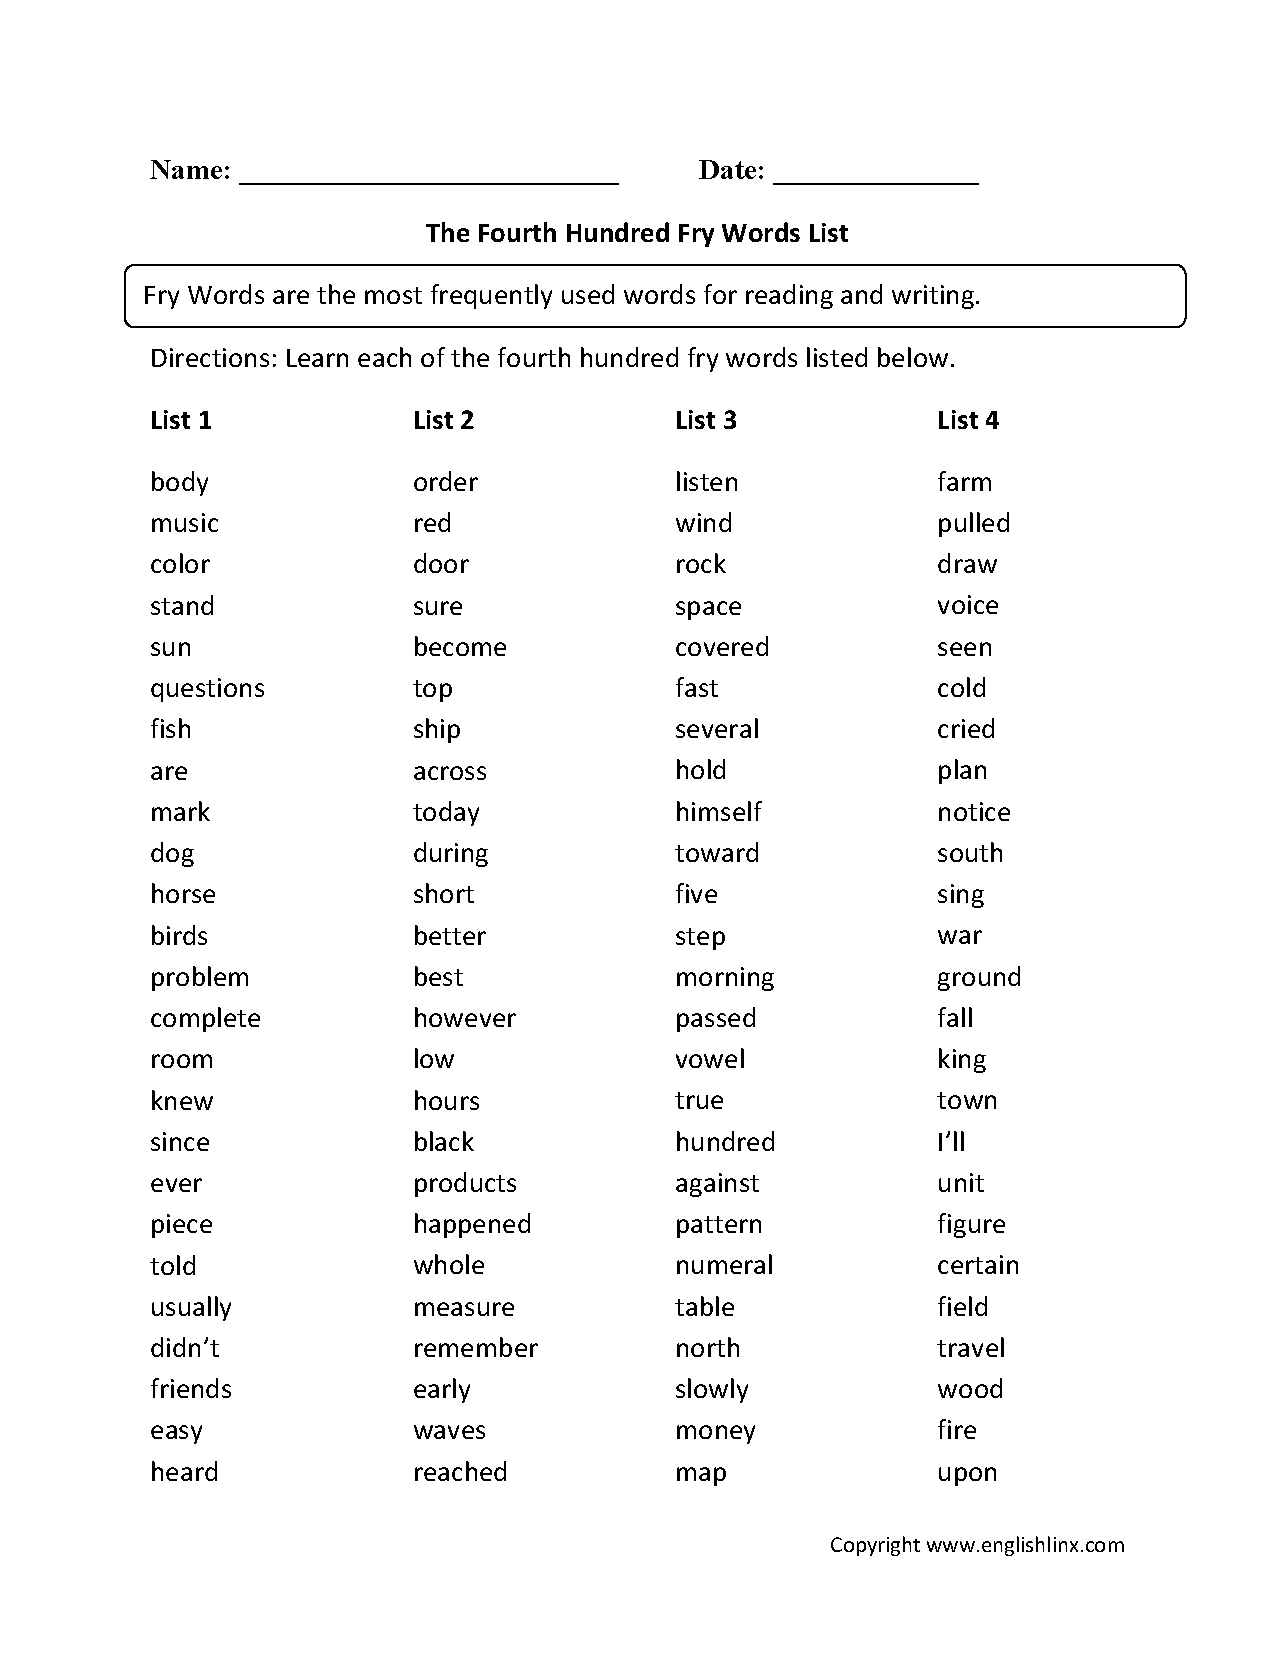 6th grade sight words worksheets